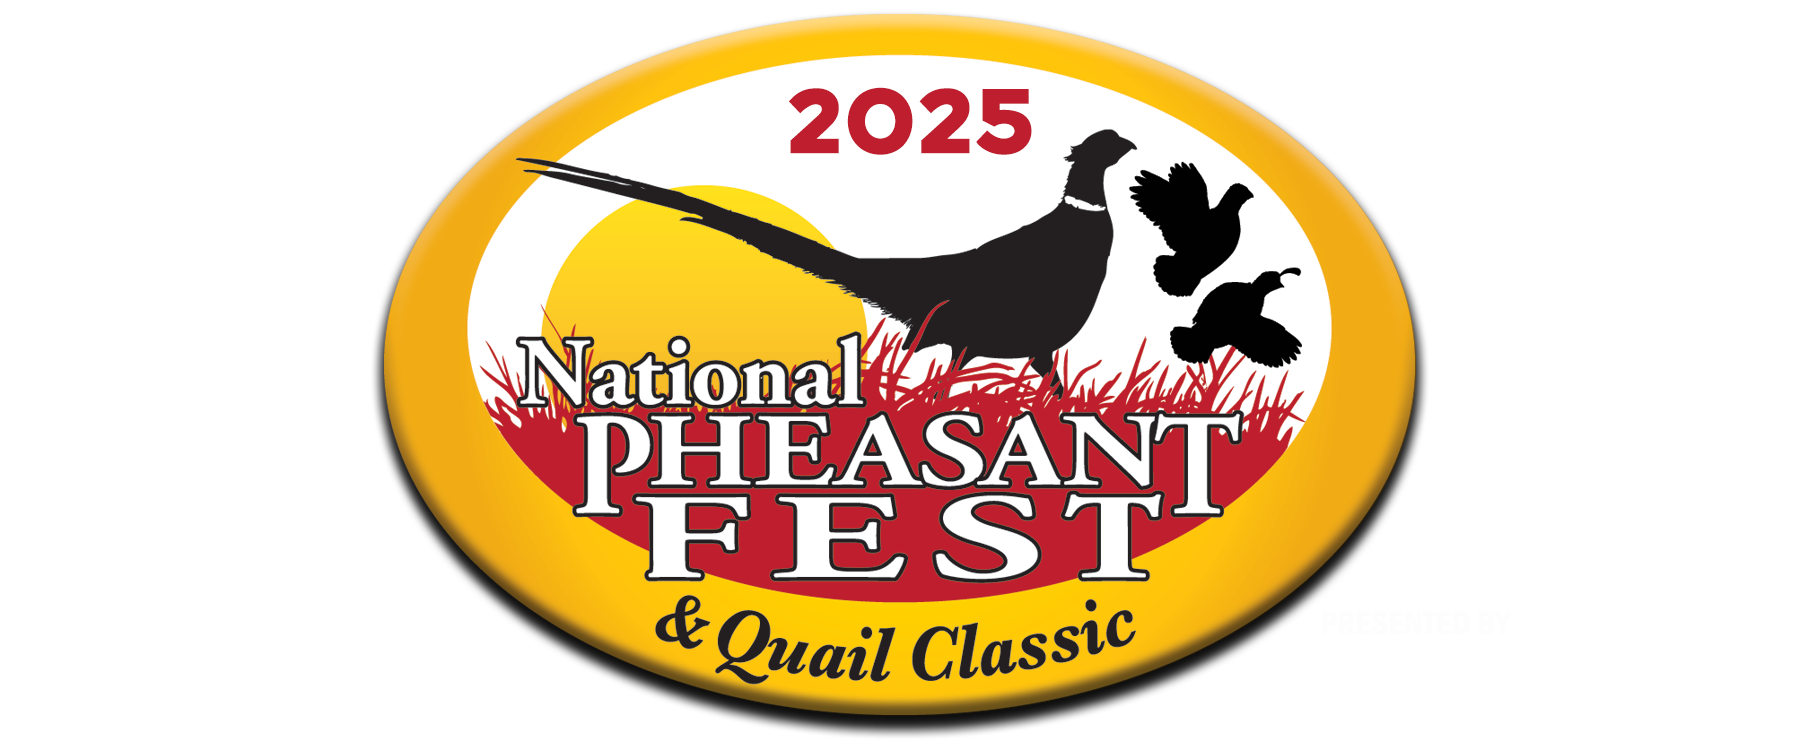 Pheasant Fest